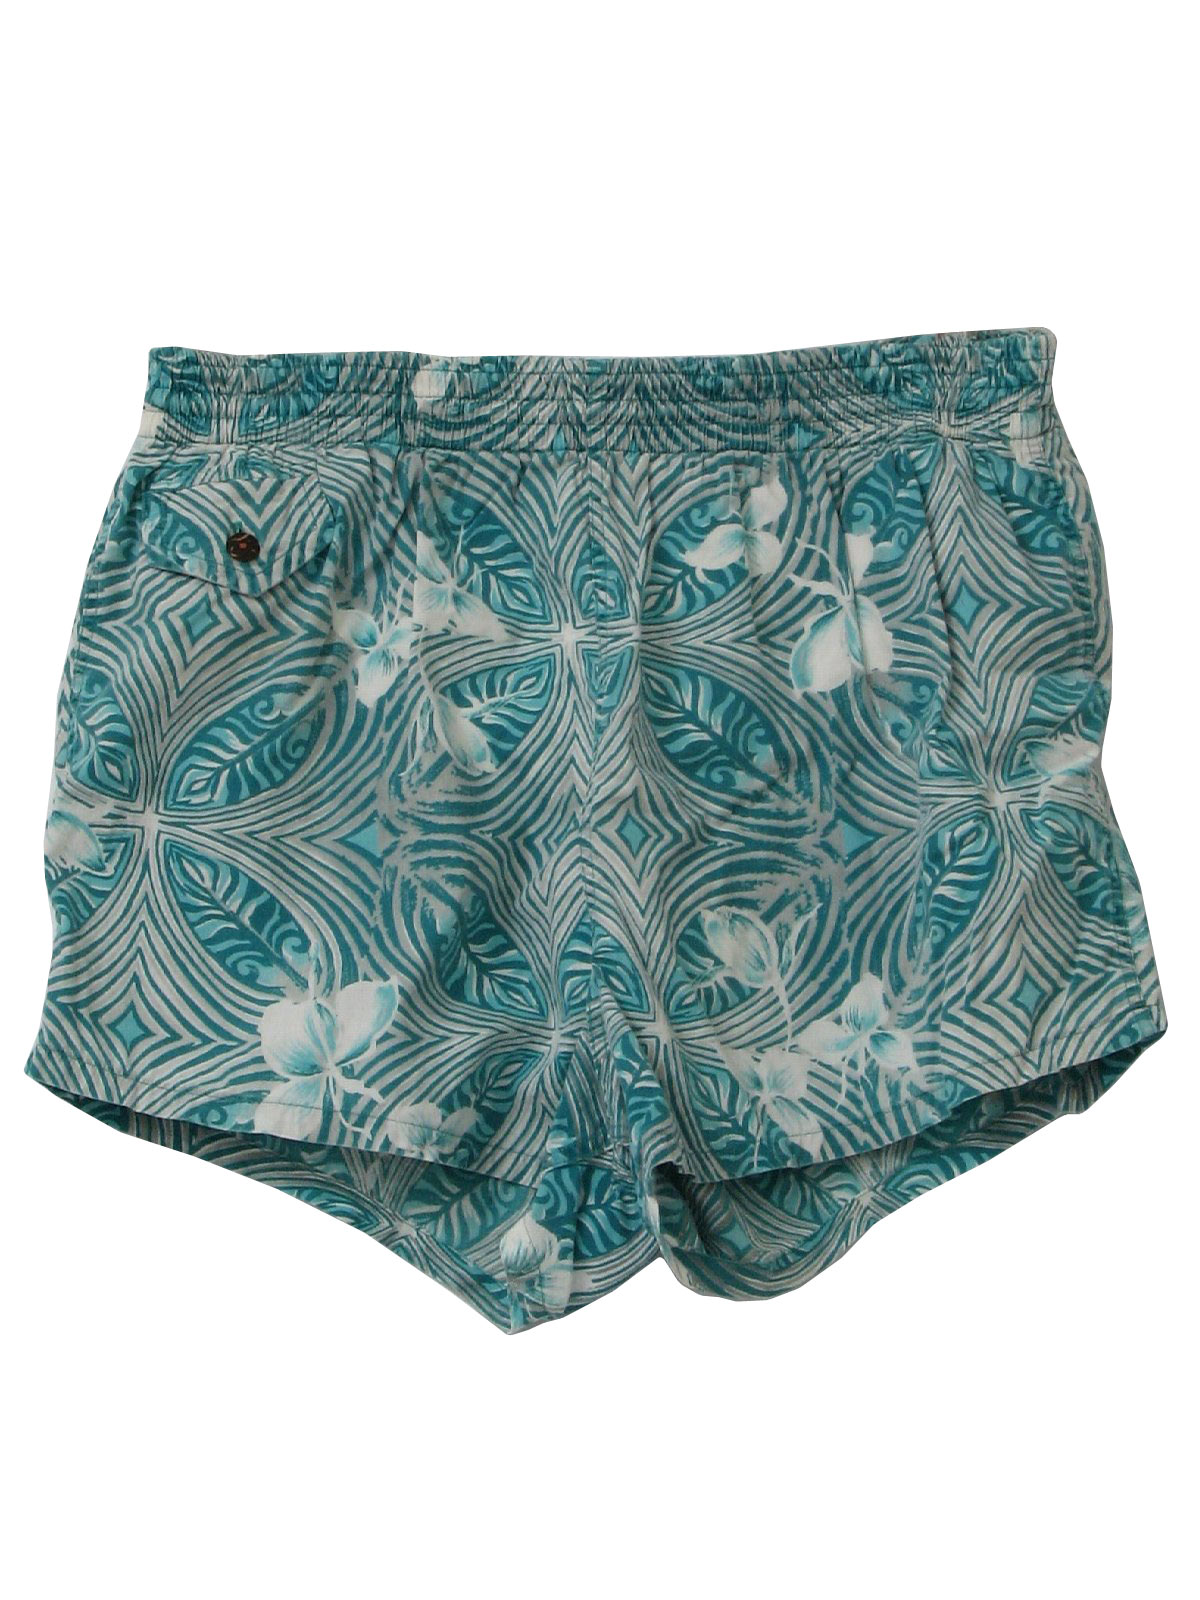 1960's Swimsuit/Swimwear (Nani): 60s -Nani- Mens turquoise, teal, white ...